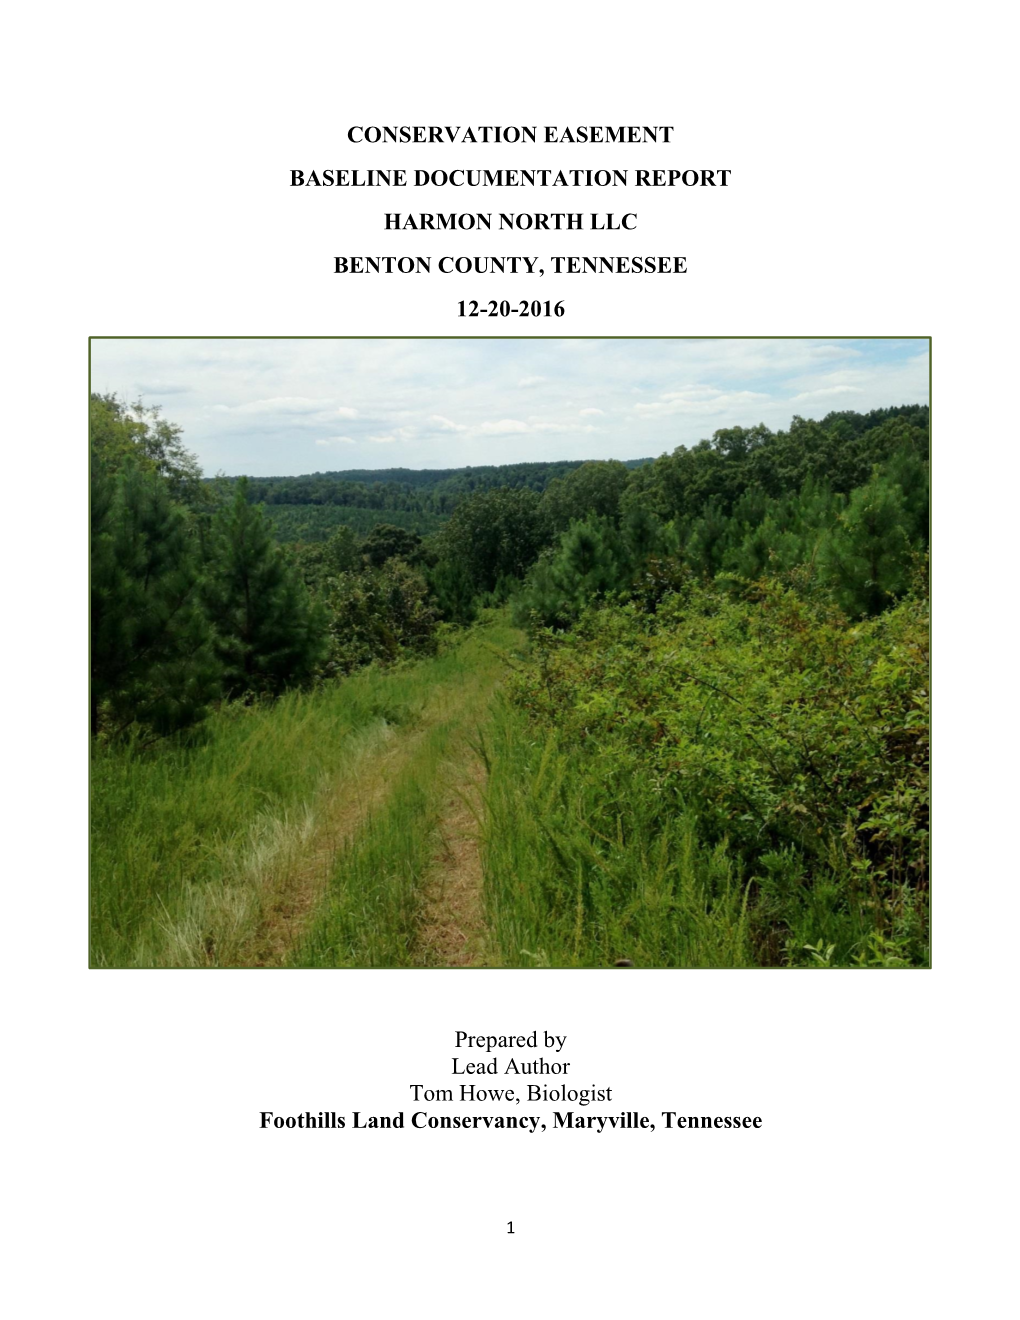 Conservation Easement Baseline Documentation Report Harmon North Llc Benton County, Tennessee 12-20-2016